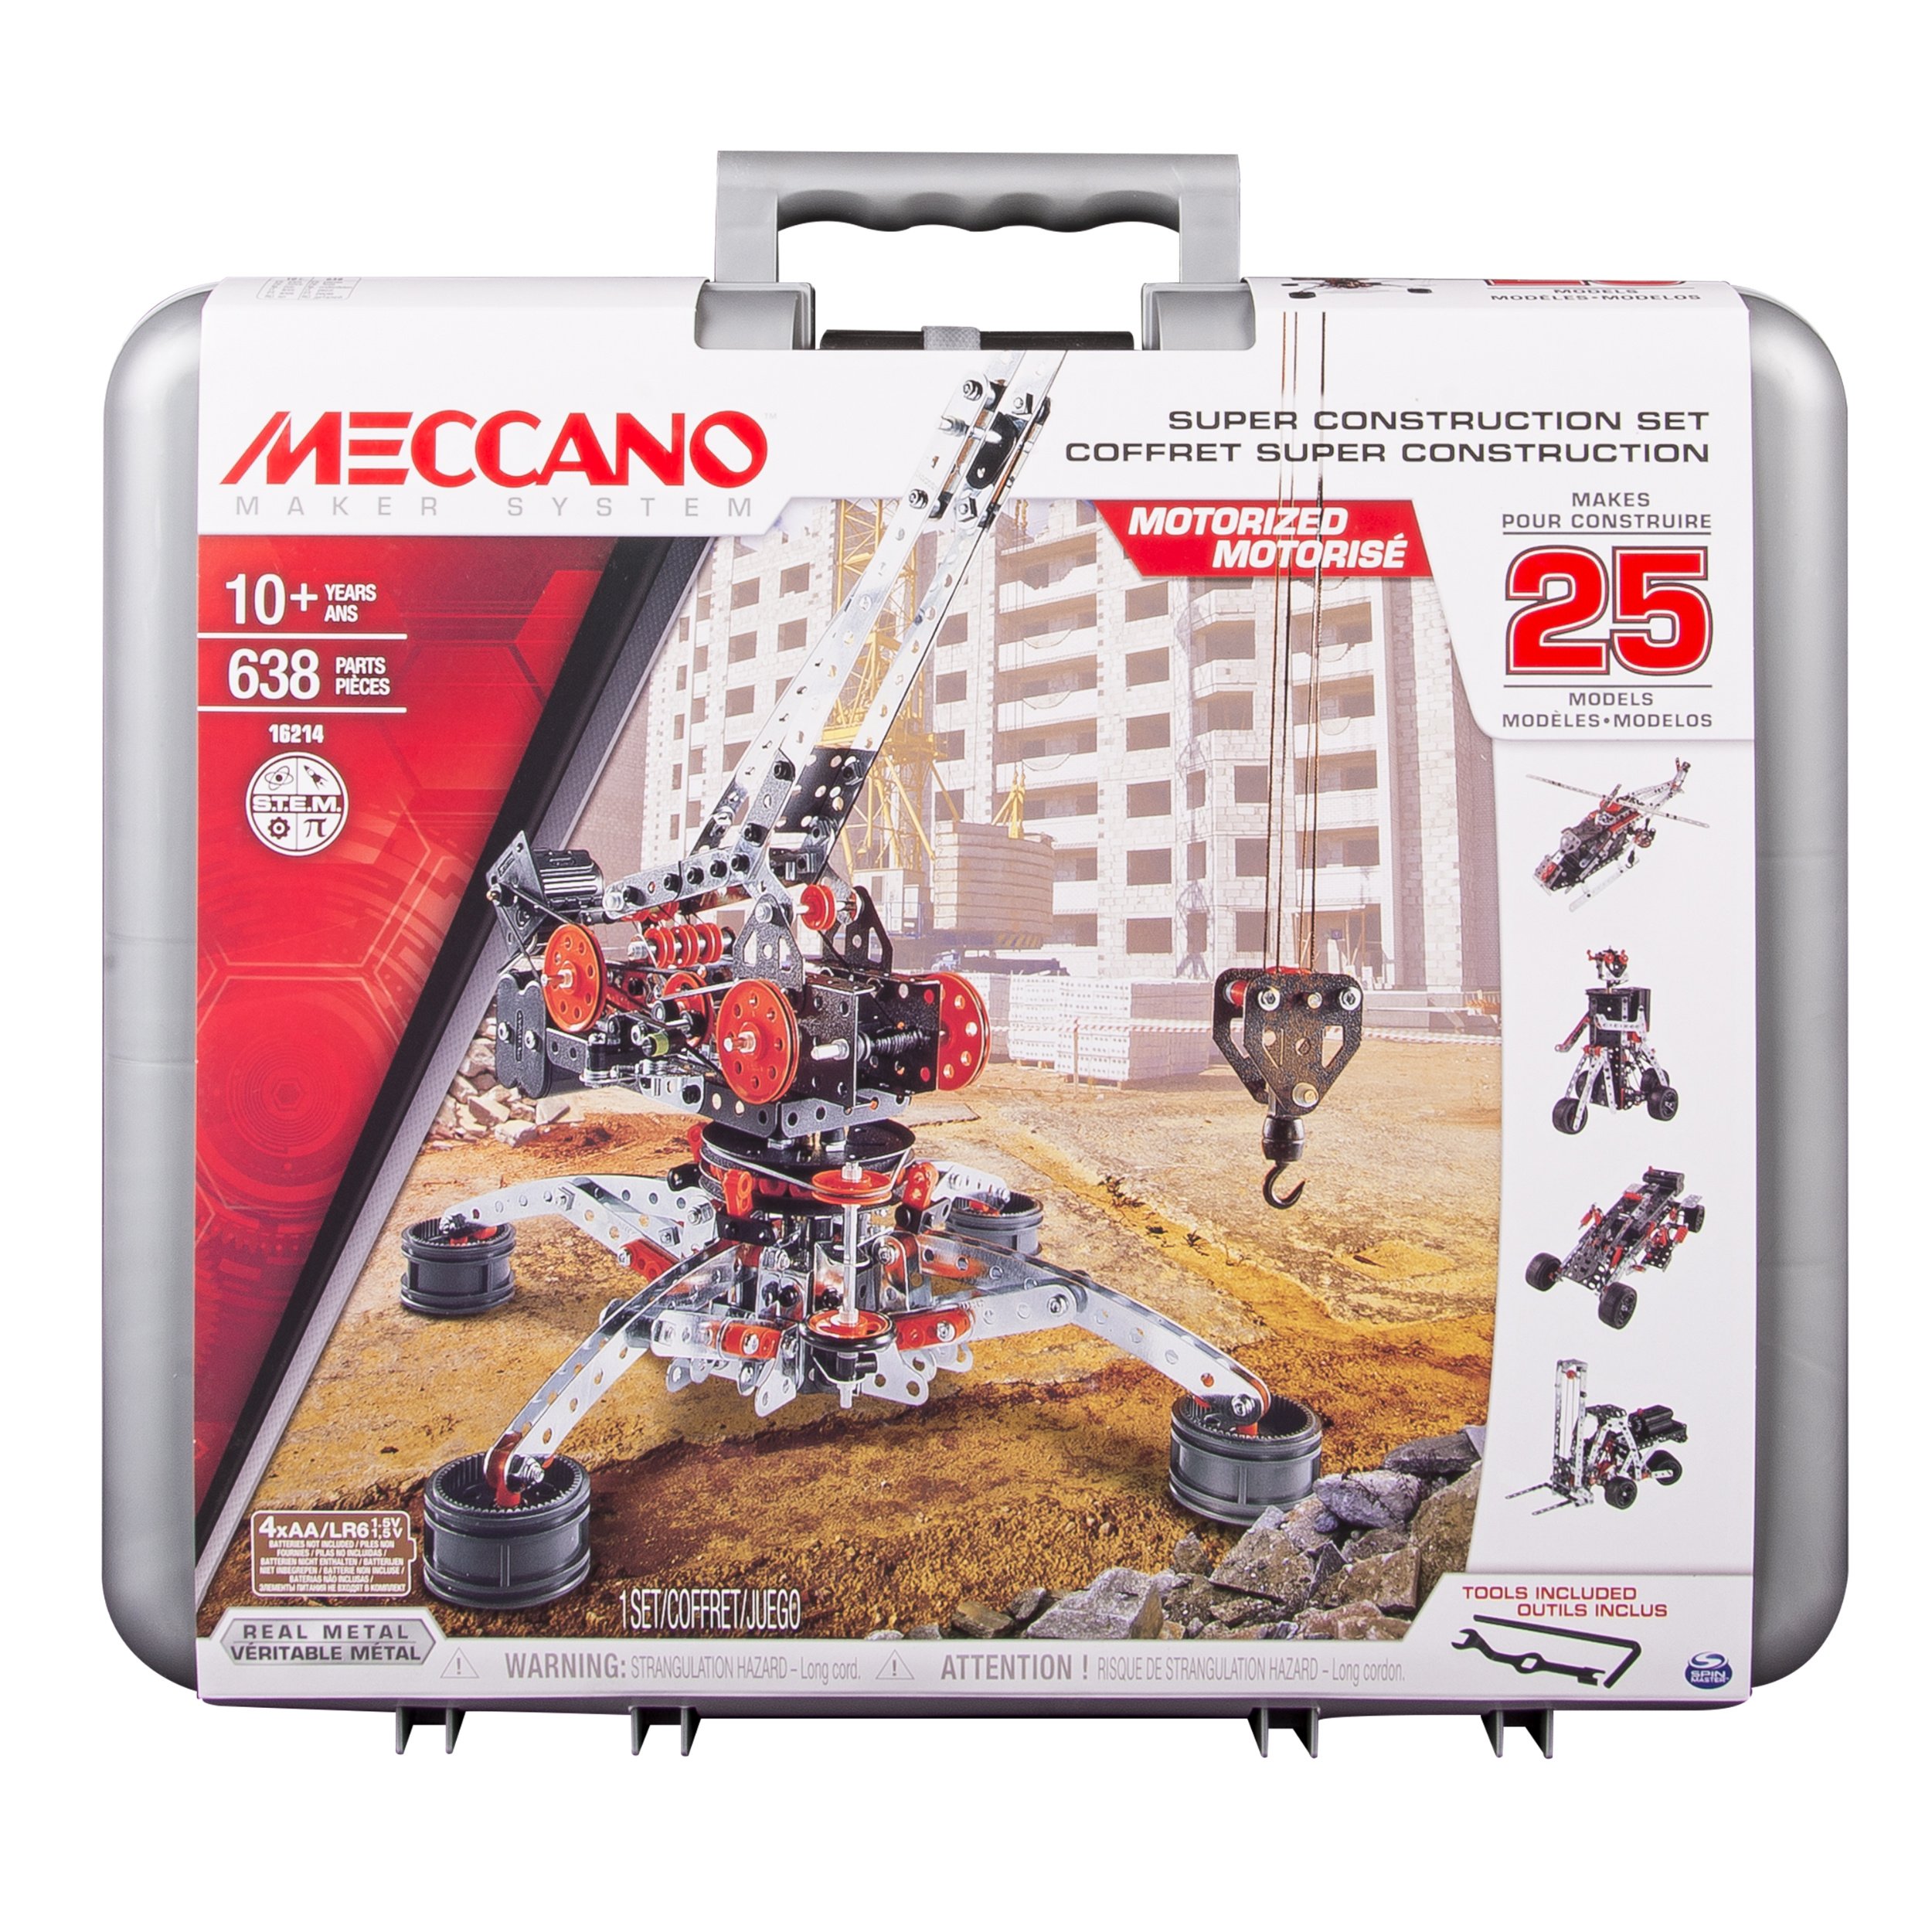 meccano 25 model set instructions